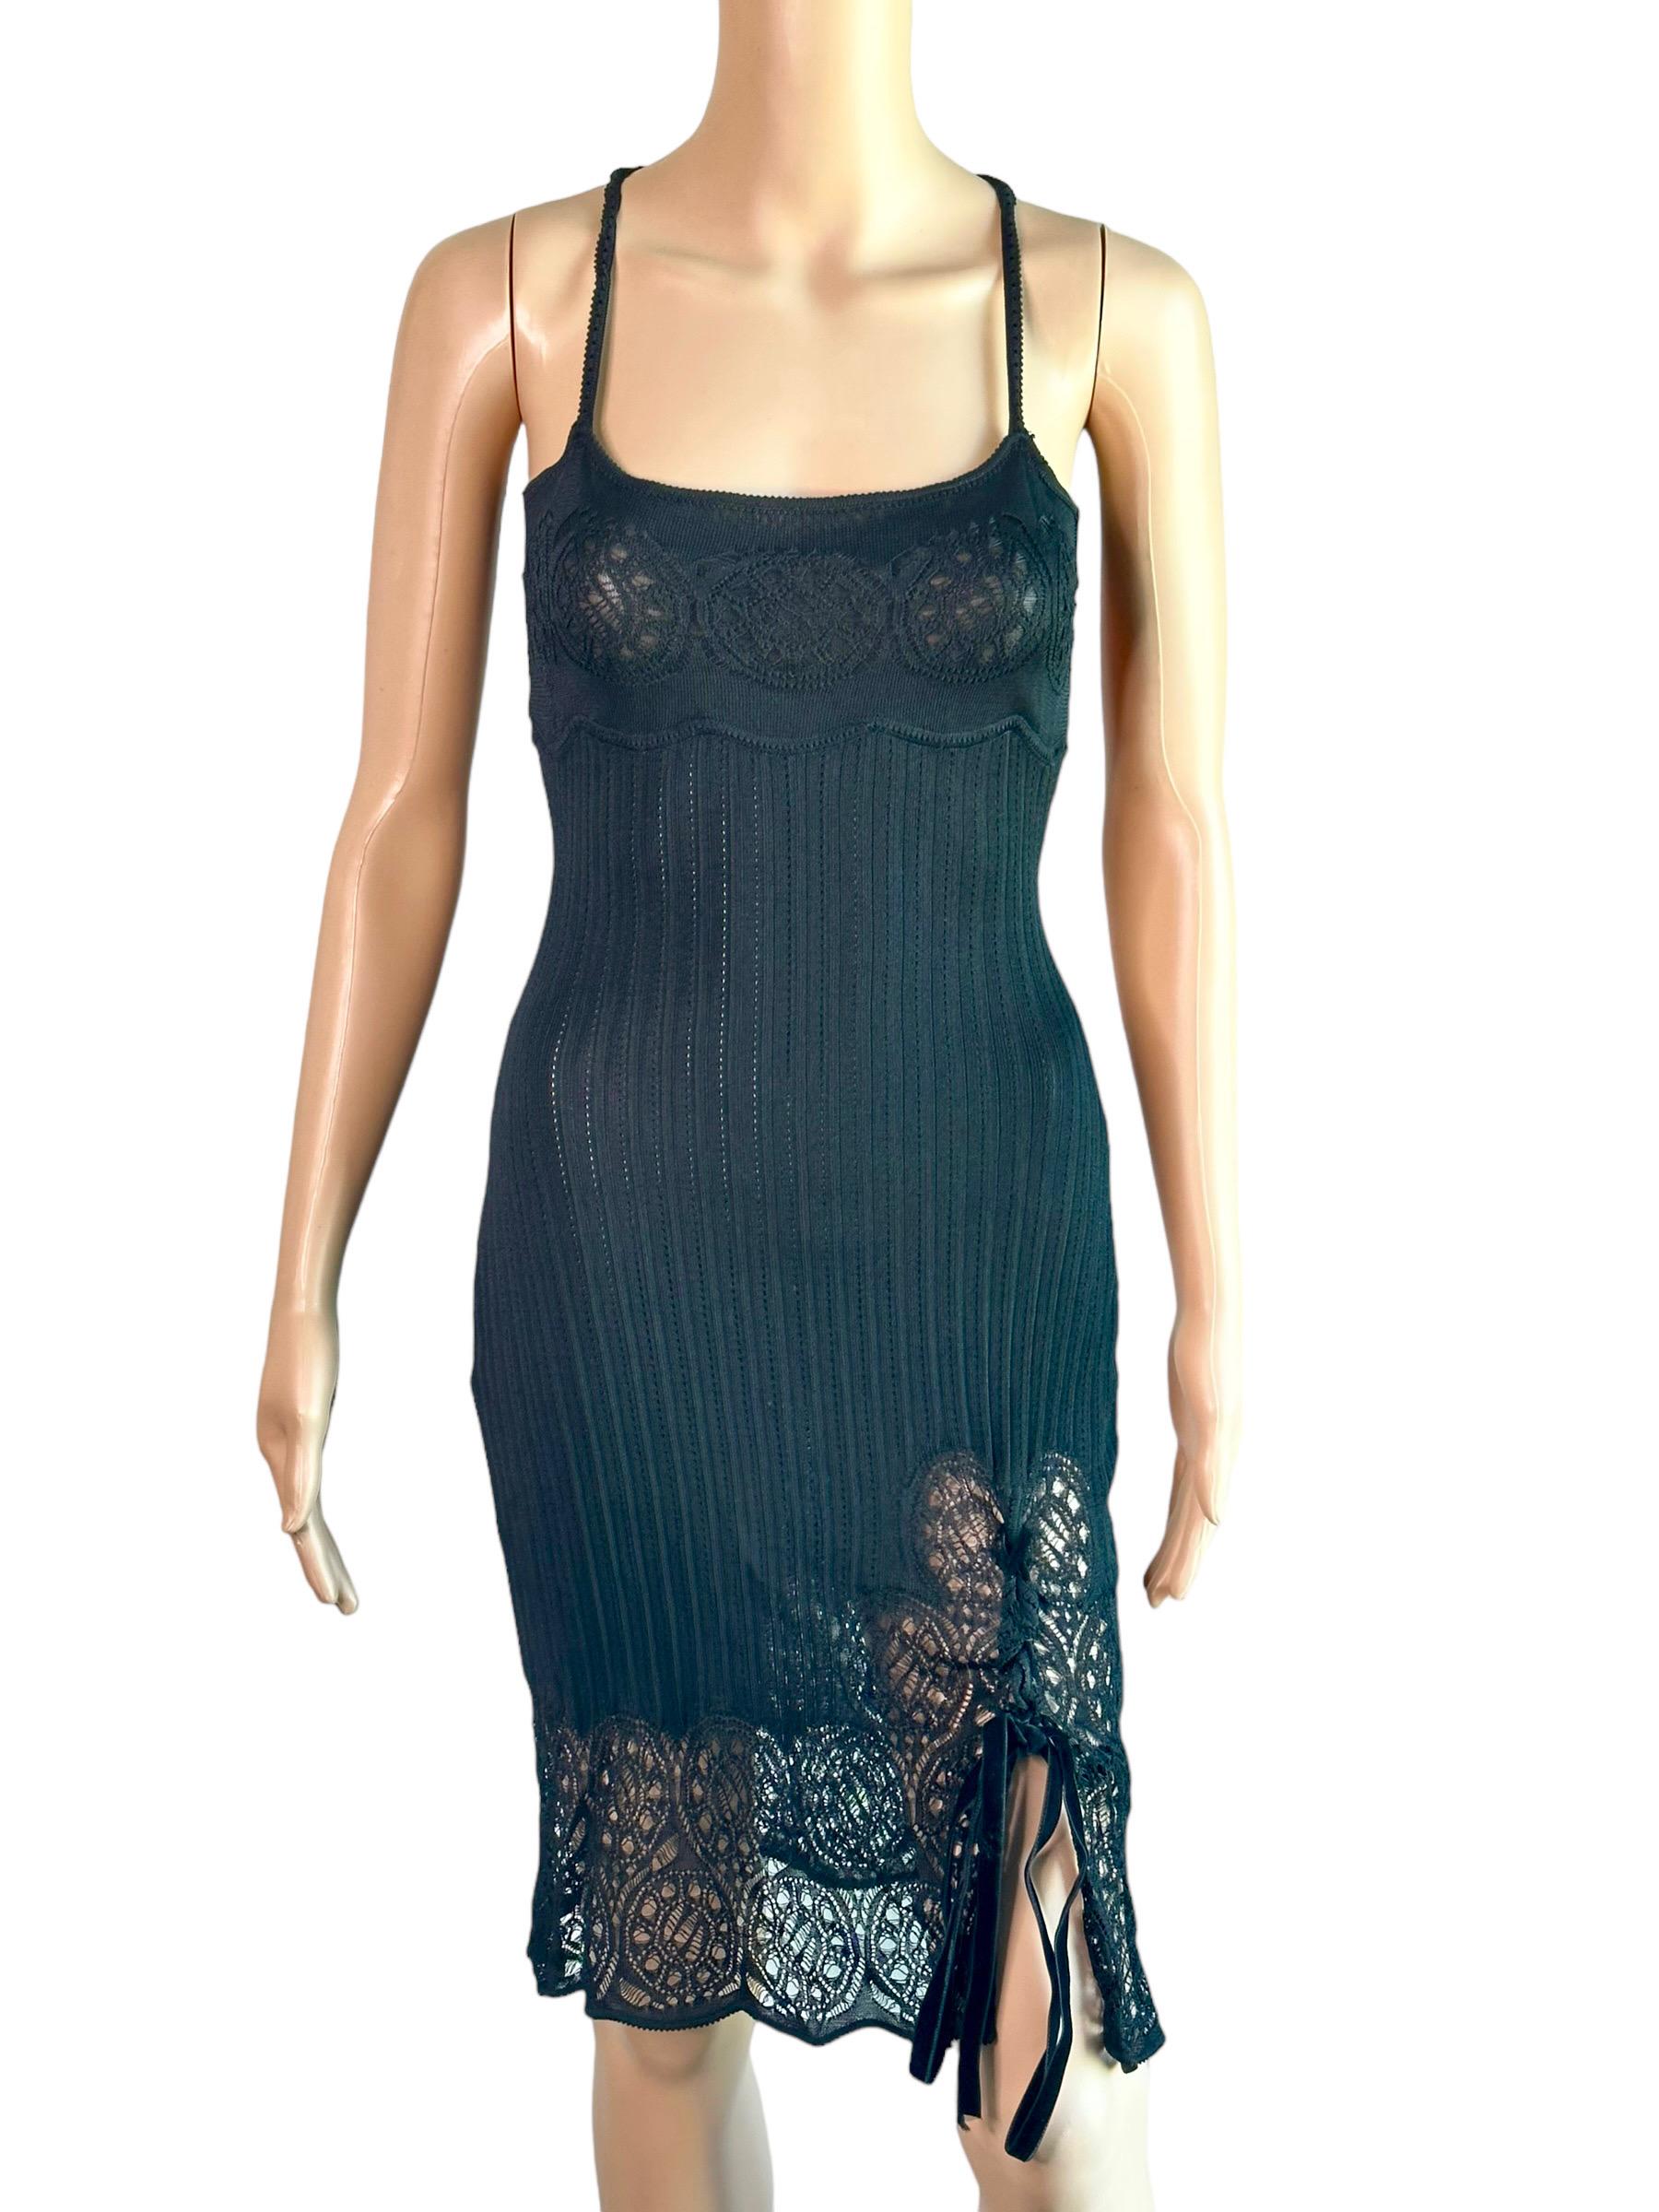 John Galliano S/S 1999 Sheer Lace Open Knit Black Mini Dress Size M

FOLLOW US ON INSTAGRAM @OPULENTADDICT